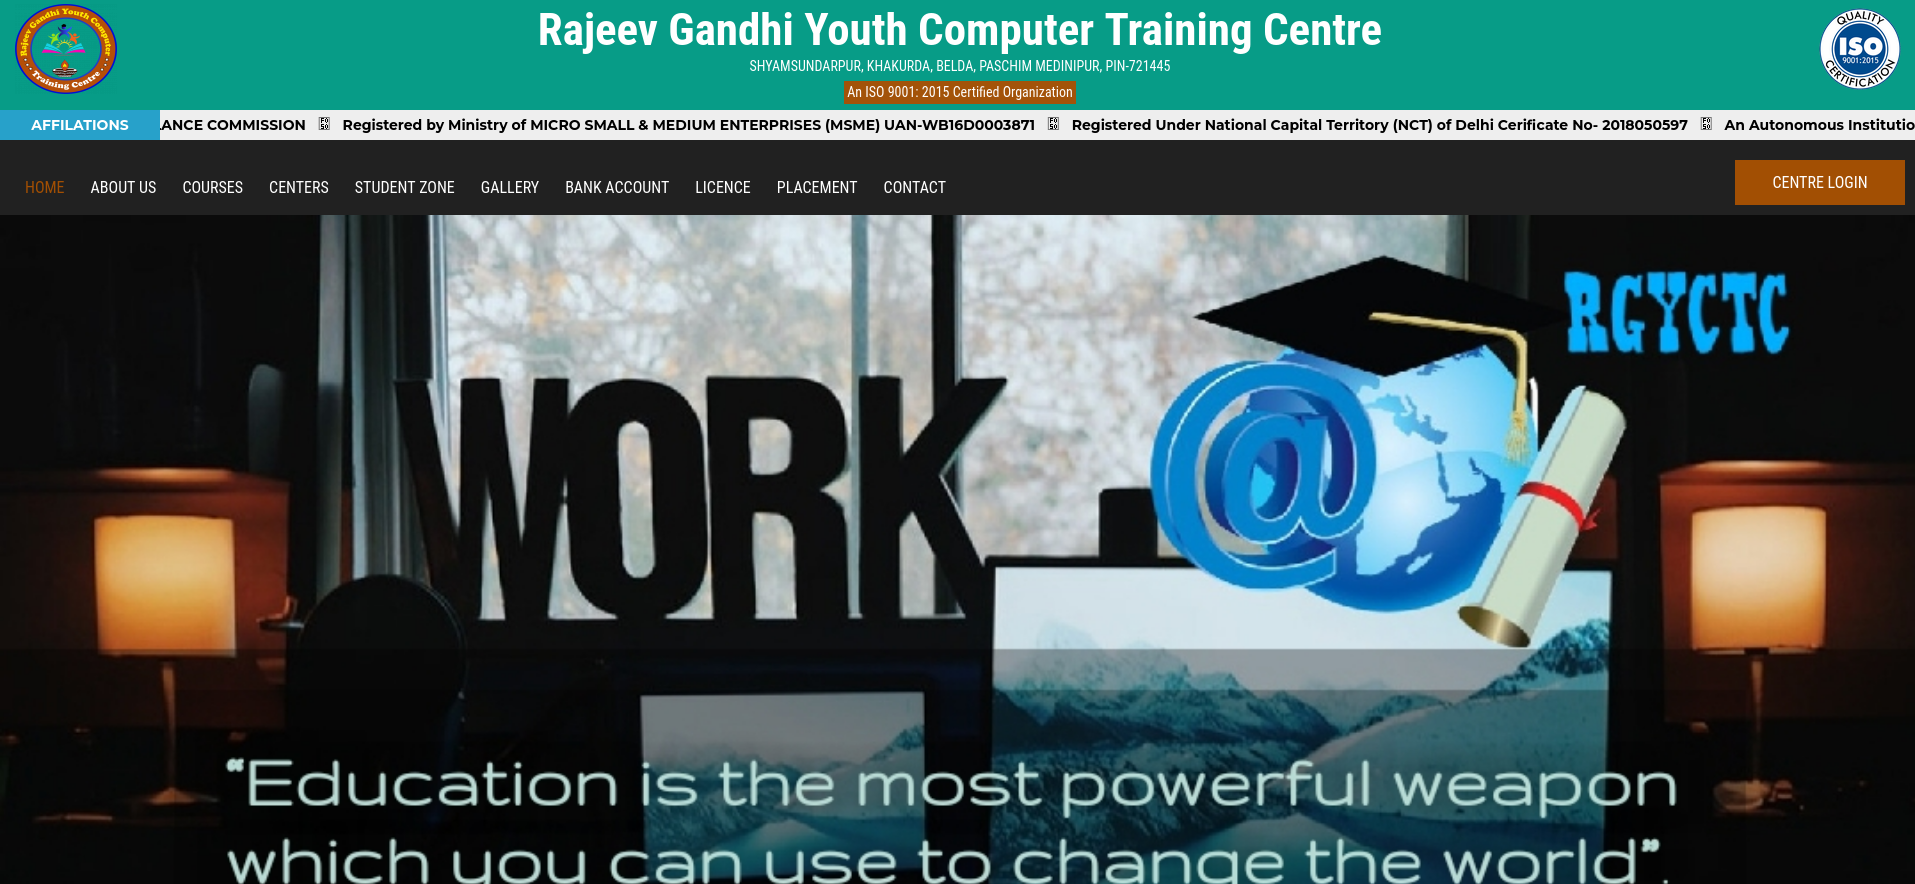 Rajeev Gandhi Youth Computer Training Centre